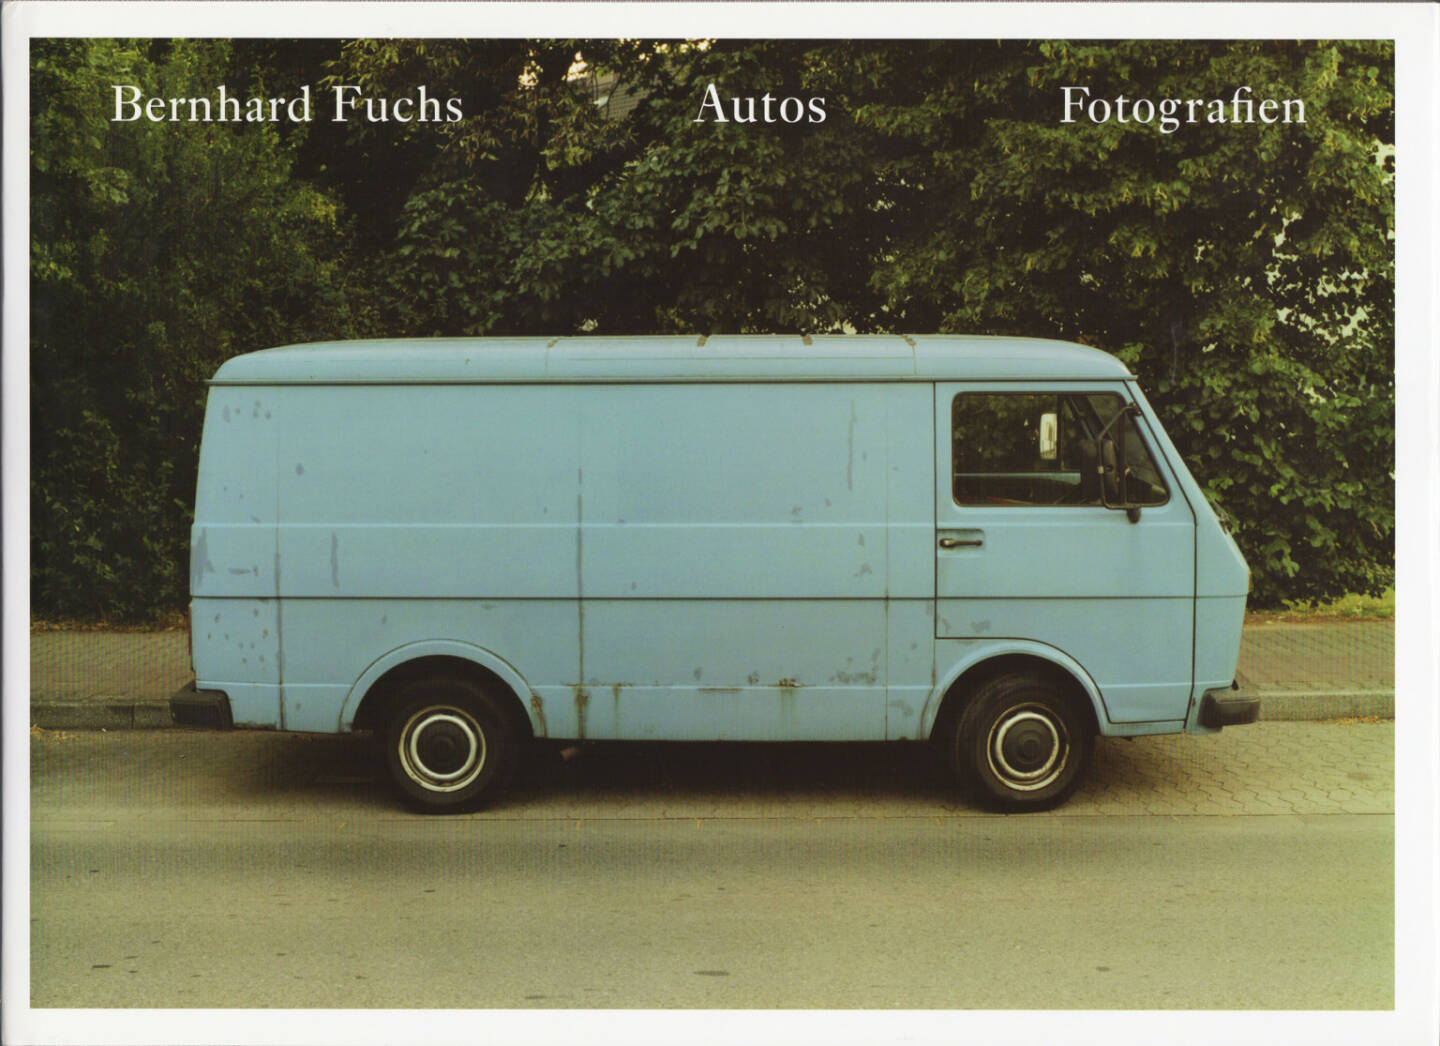 Bernhard Fuchs - Autos, König 2006, Cover - http://josefchladek.com/book/bernhard_fuchs_-_autos